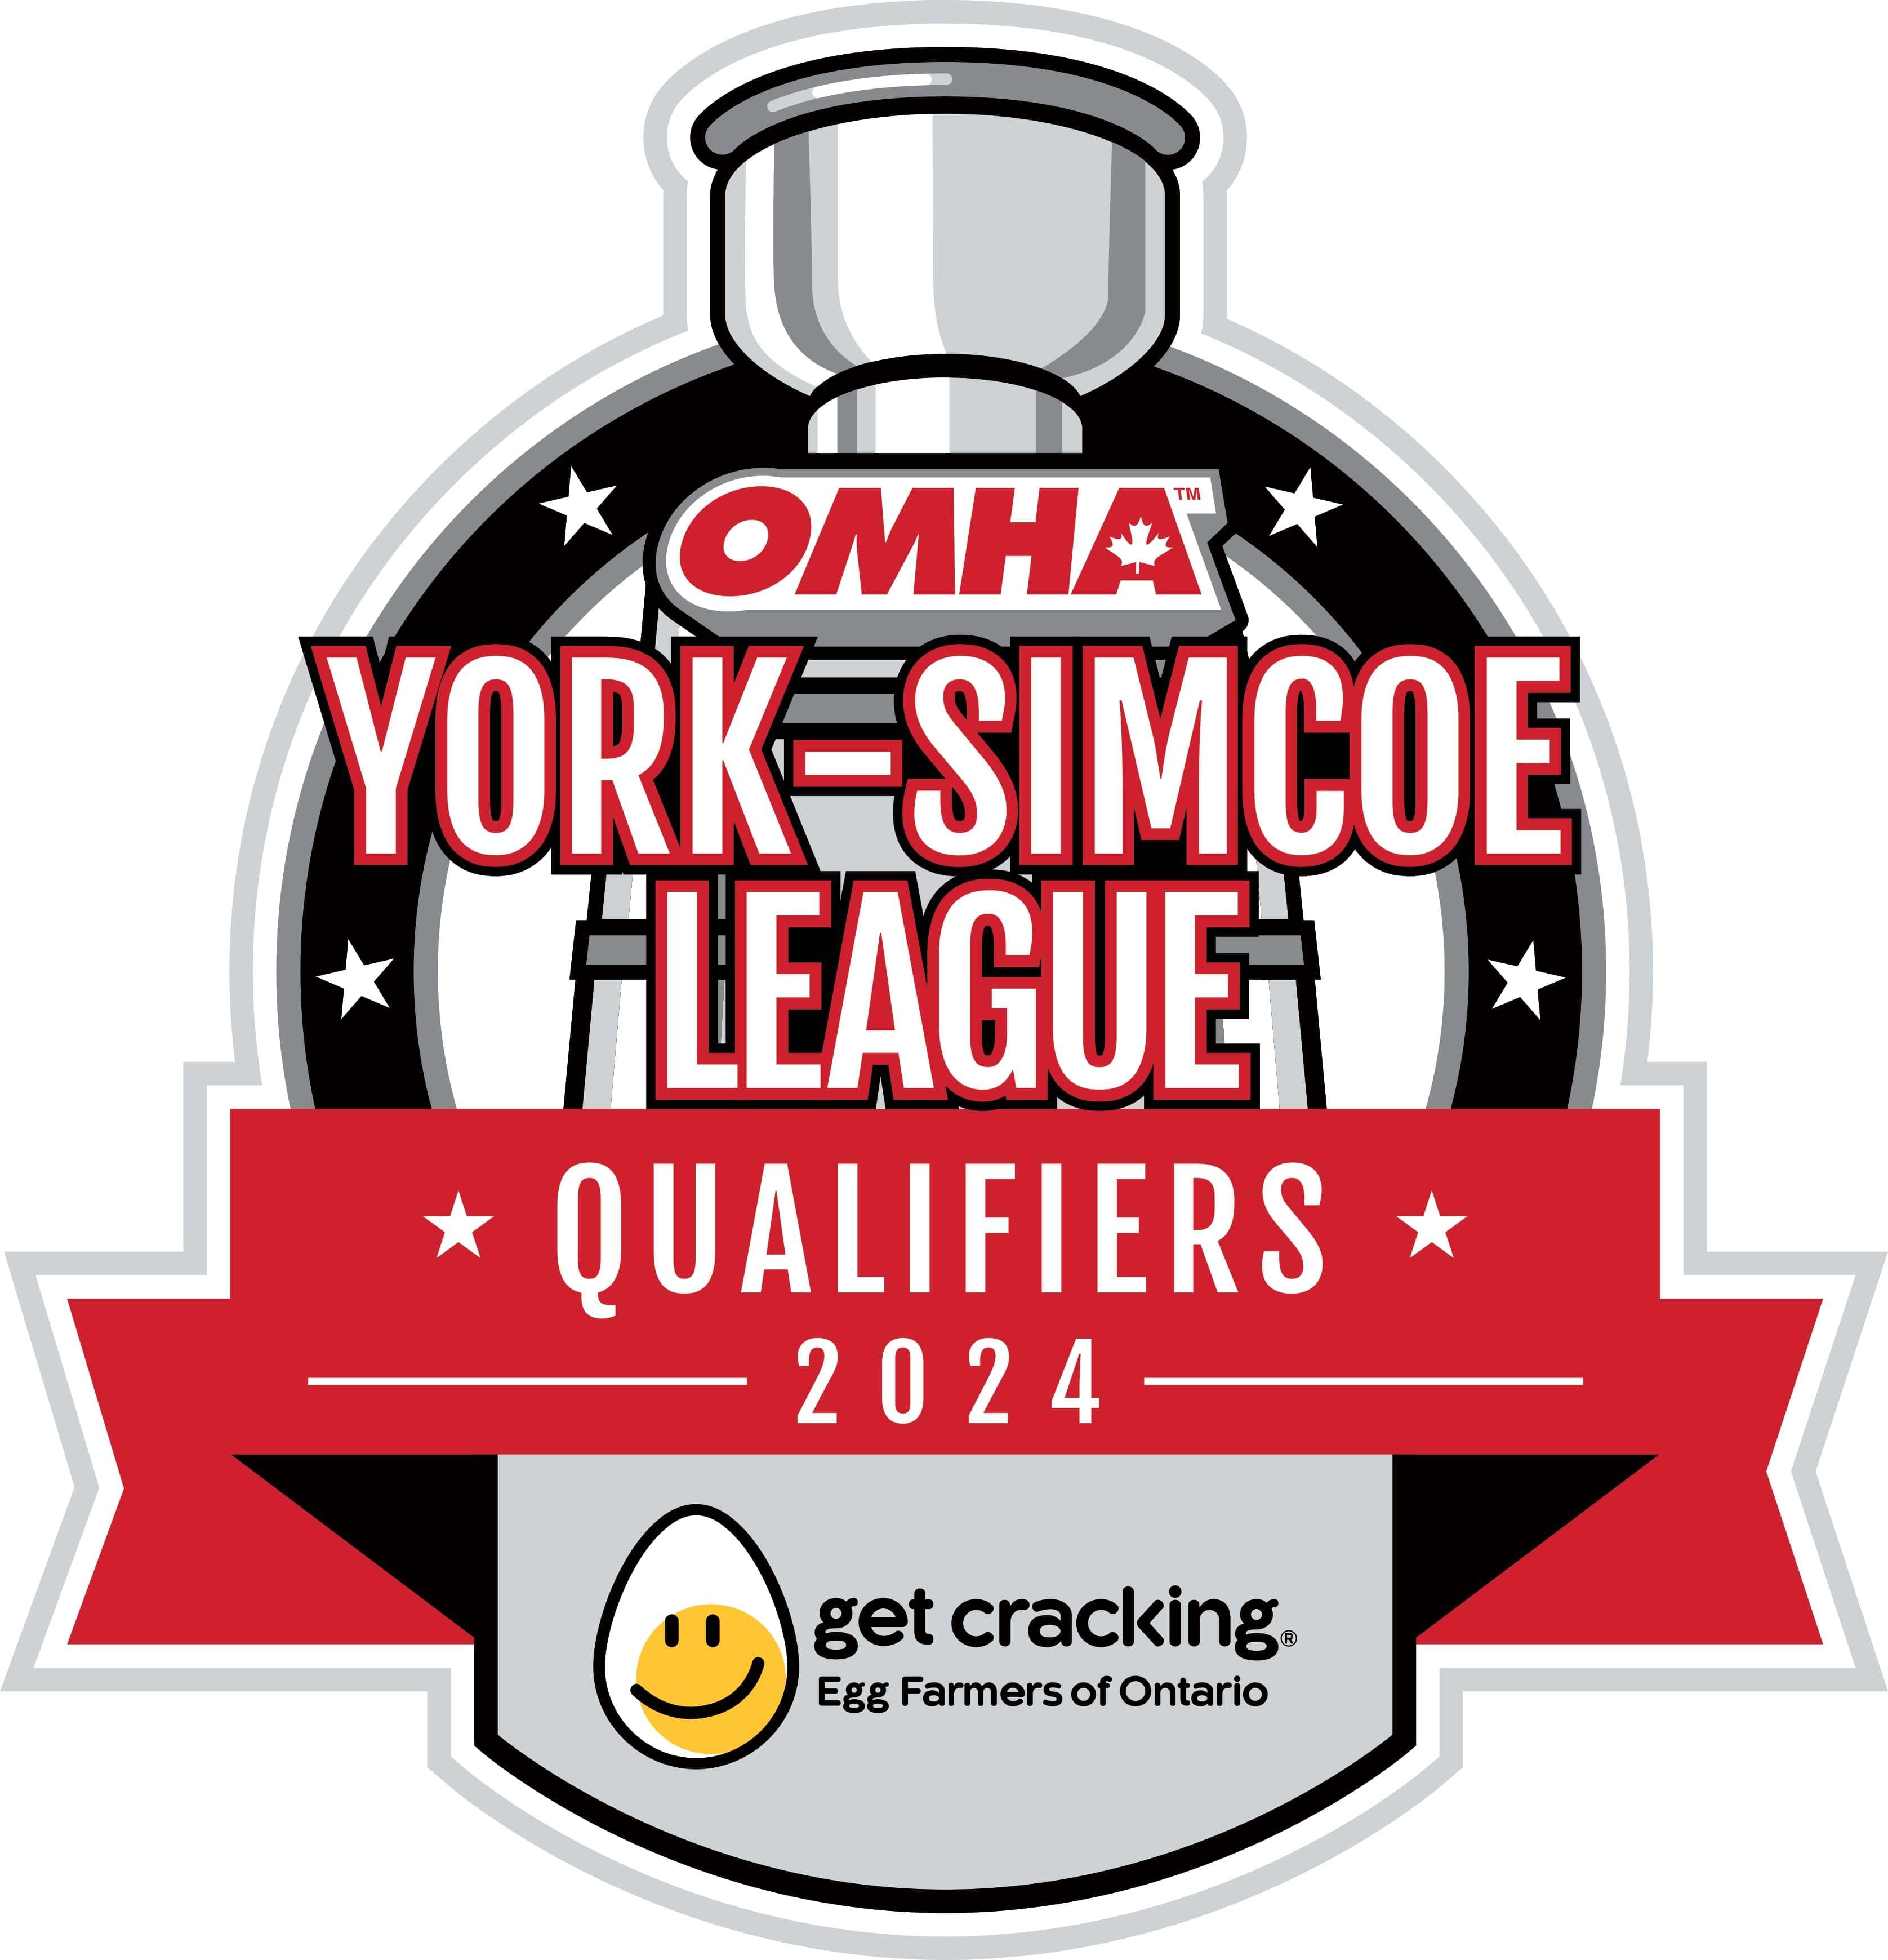 York-Simcoe_League_Qualifiers.jpg